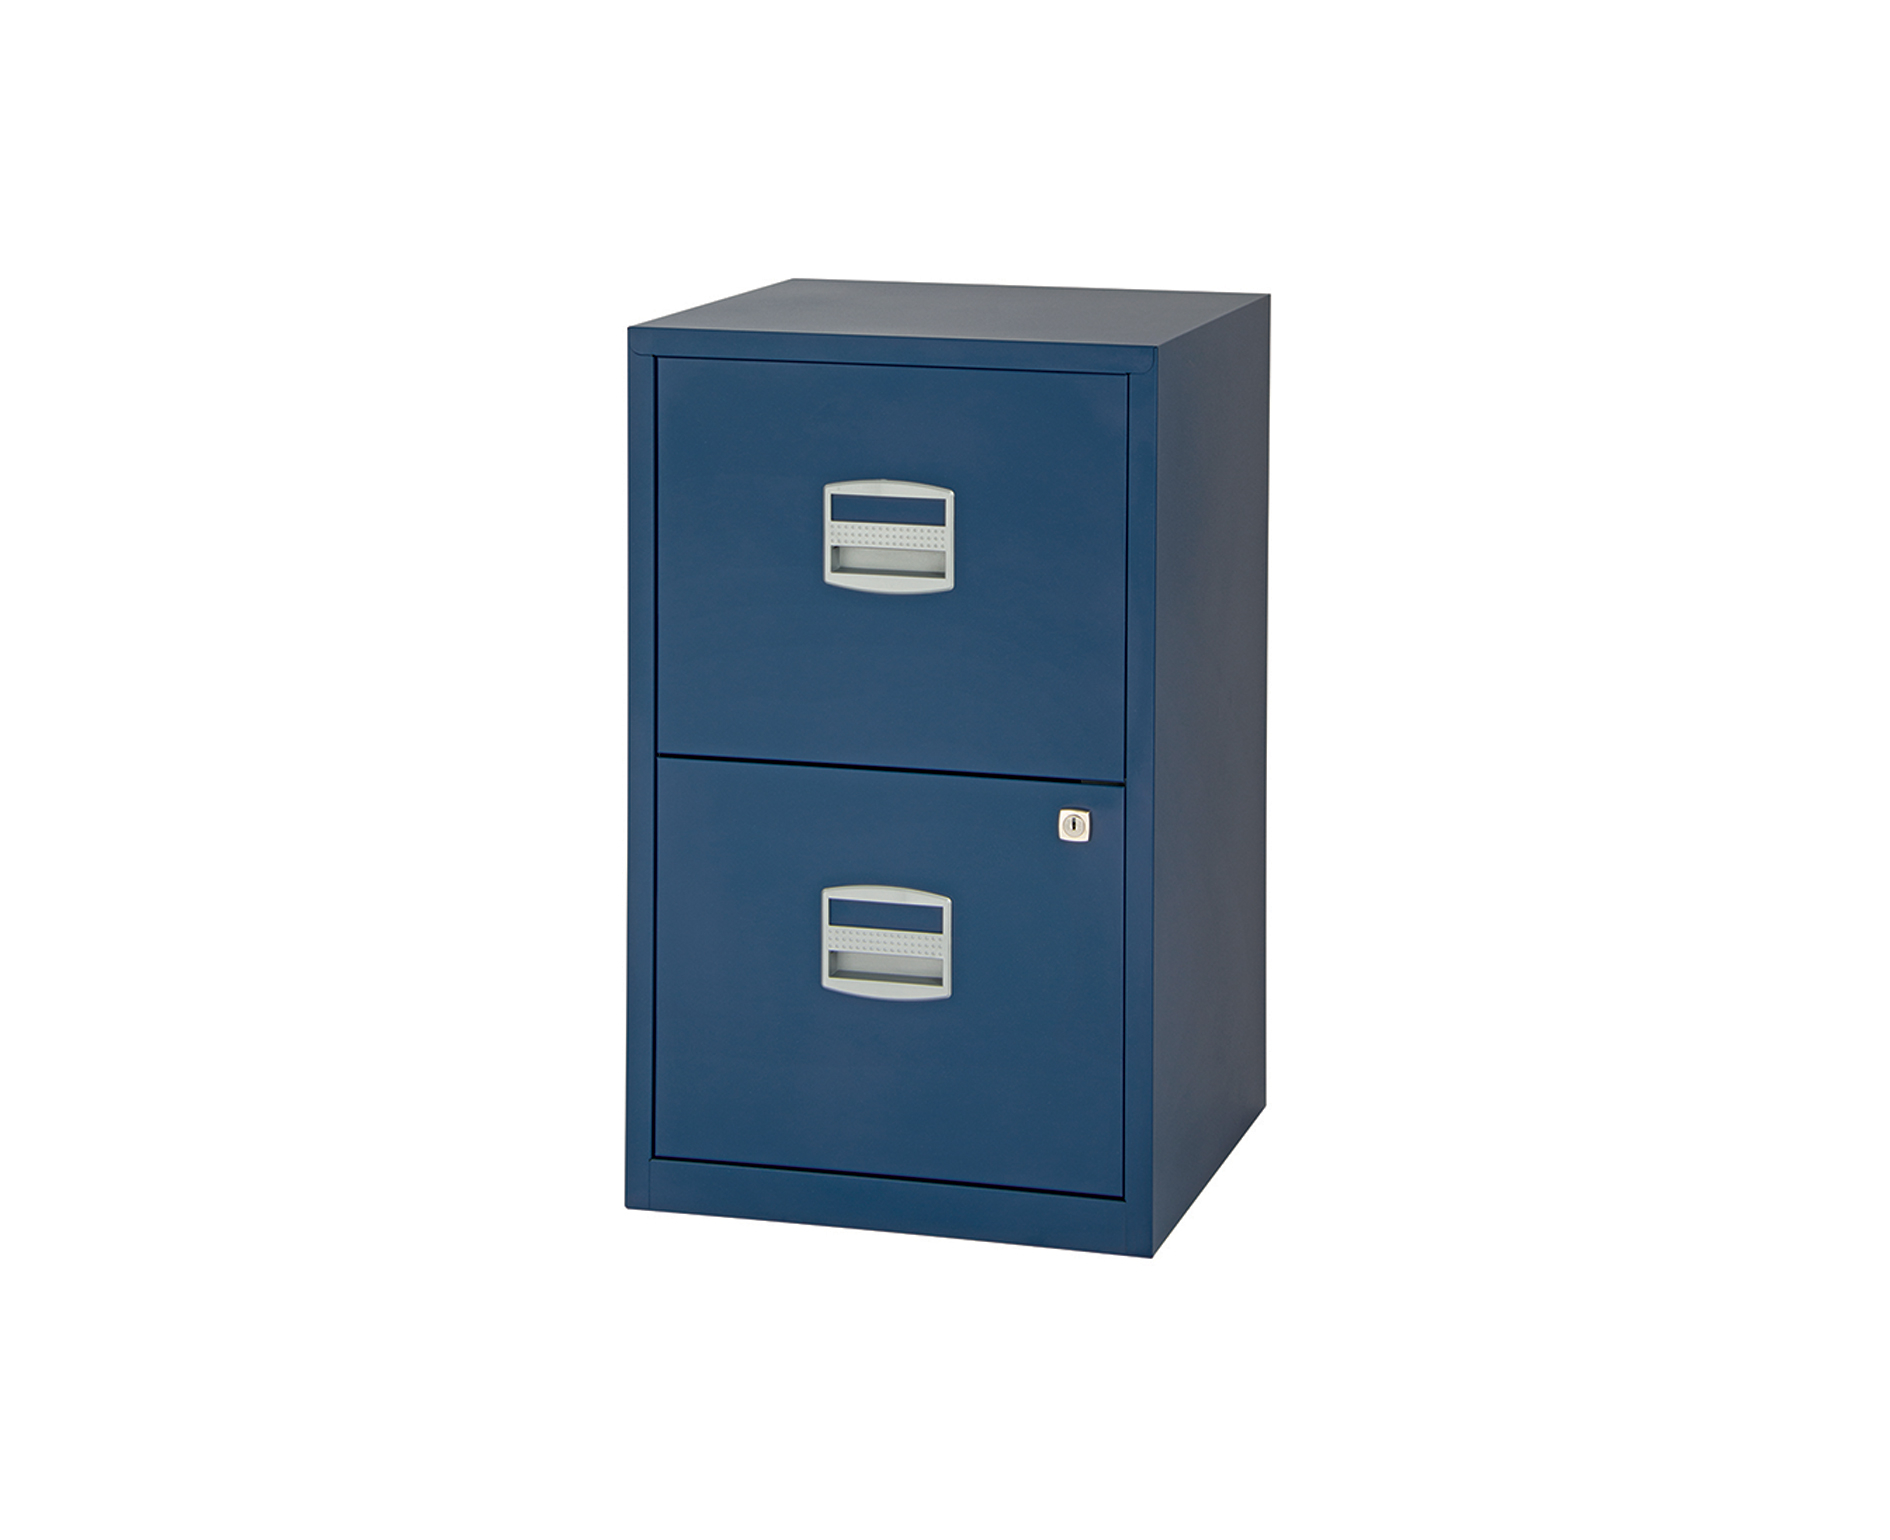 Blue Filing Cabinets Storage Shelving Furniture Storage Ryman within measurements 1890 X 1540